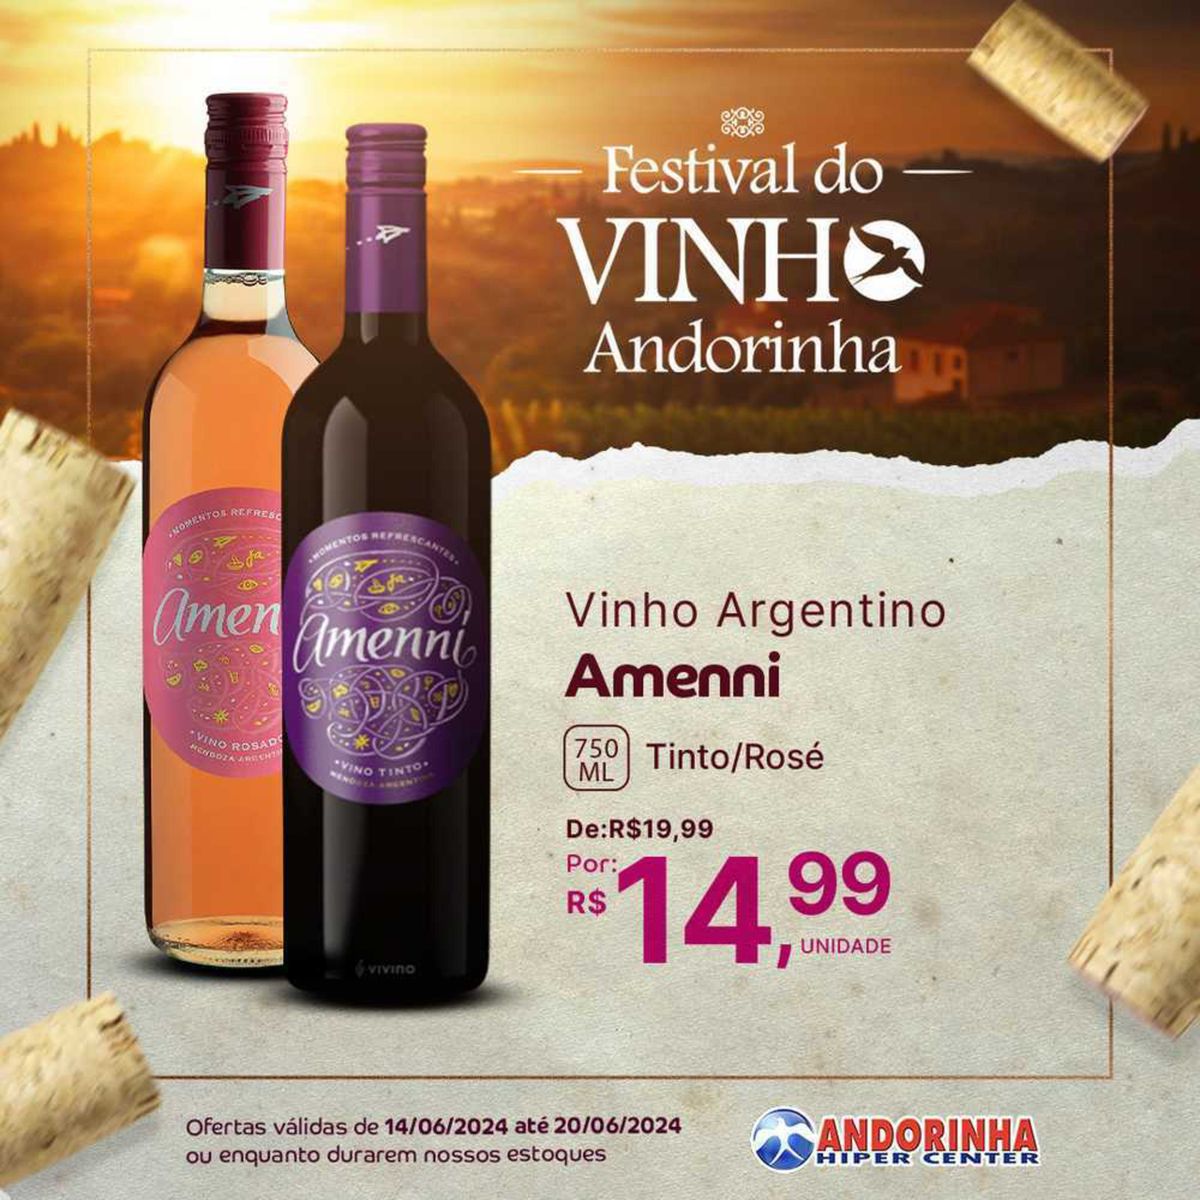 Vinho Argentino Amenni Tinto/Rosé